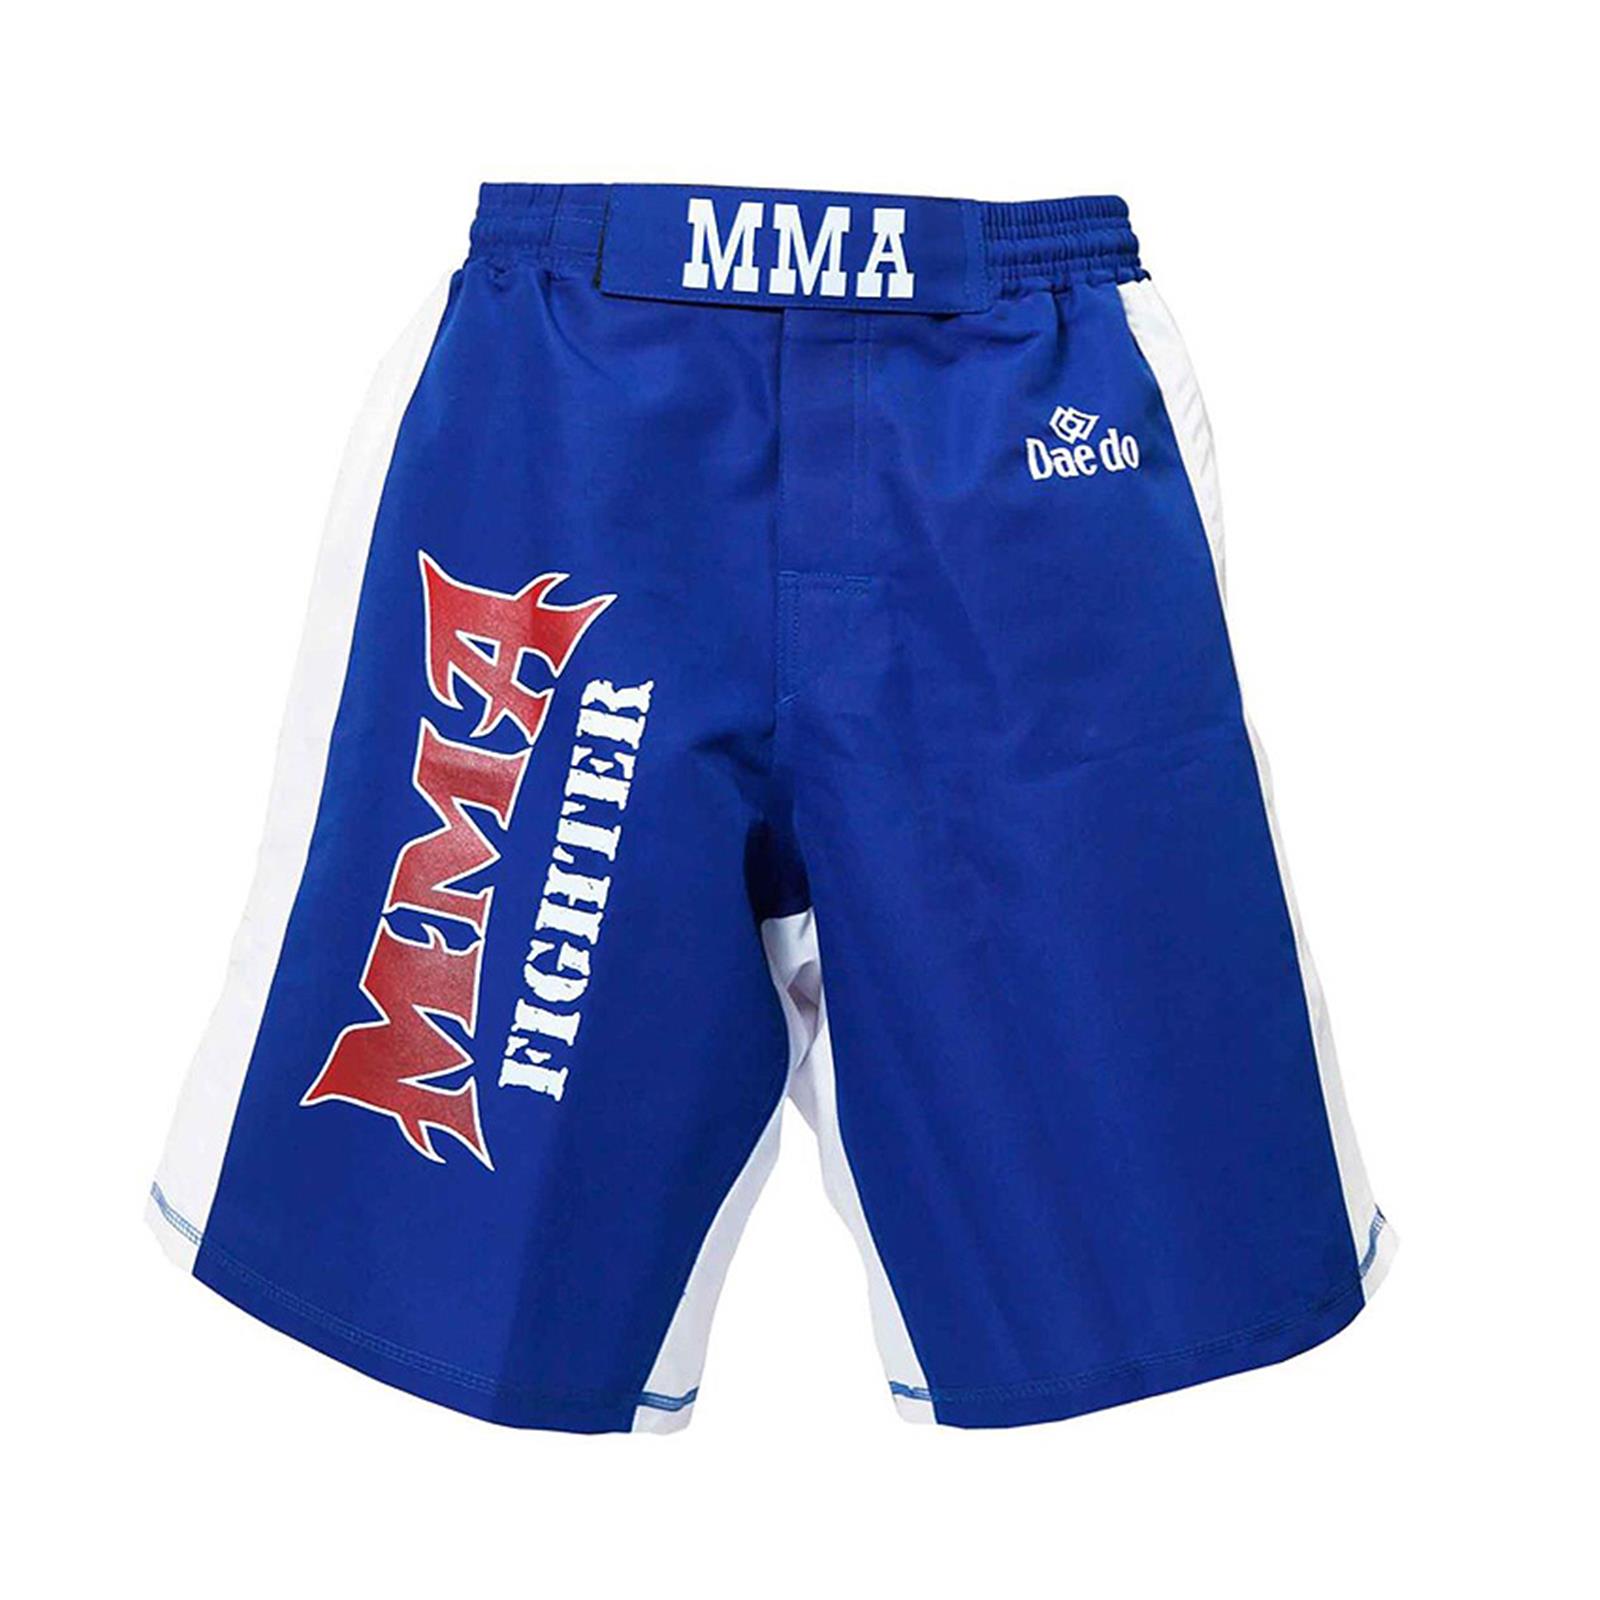 Dae Do Pantalone MMA Fighter